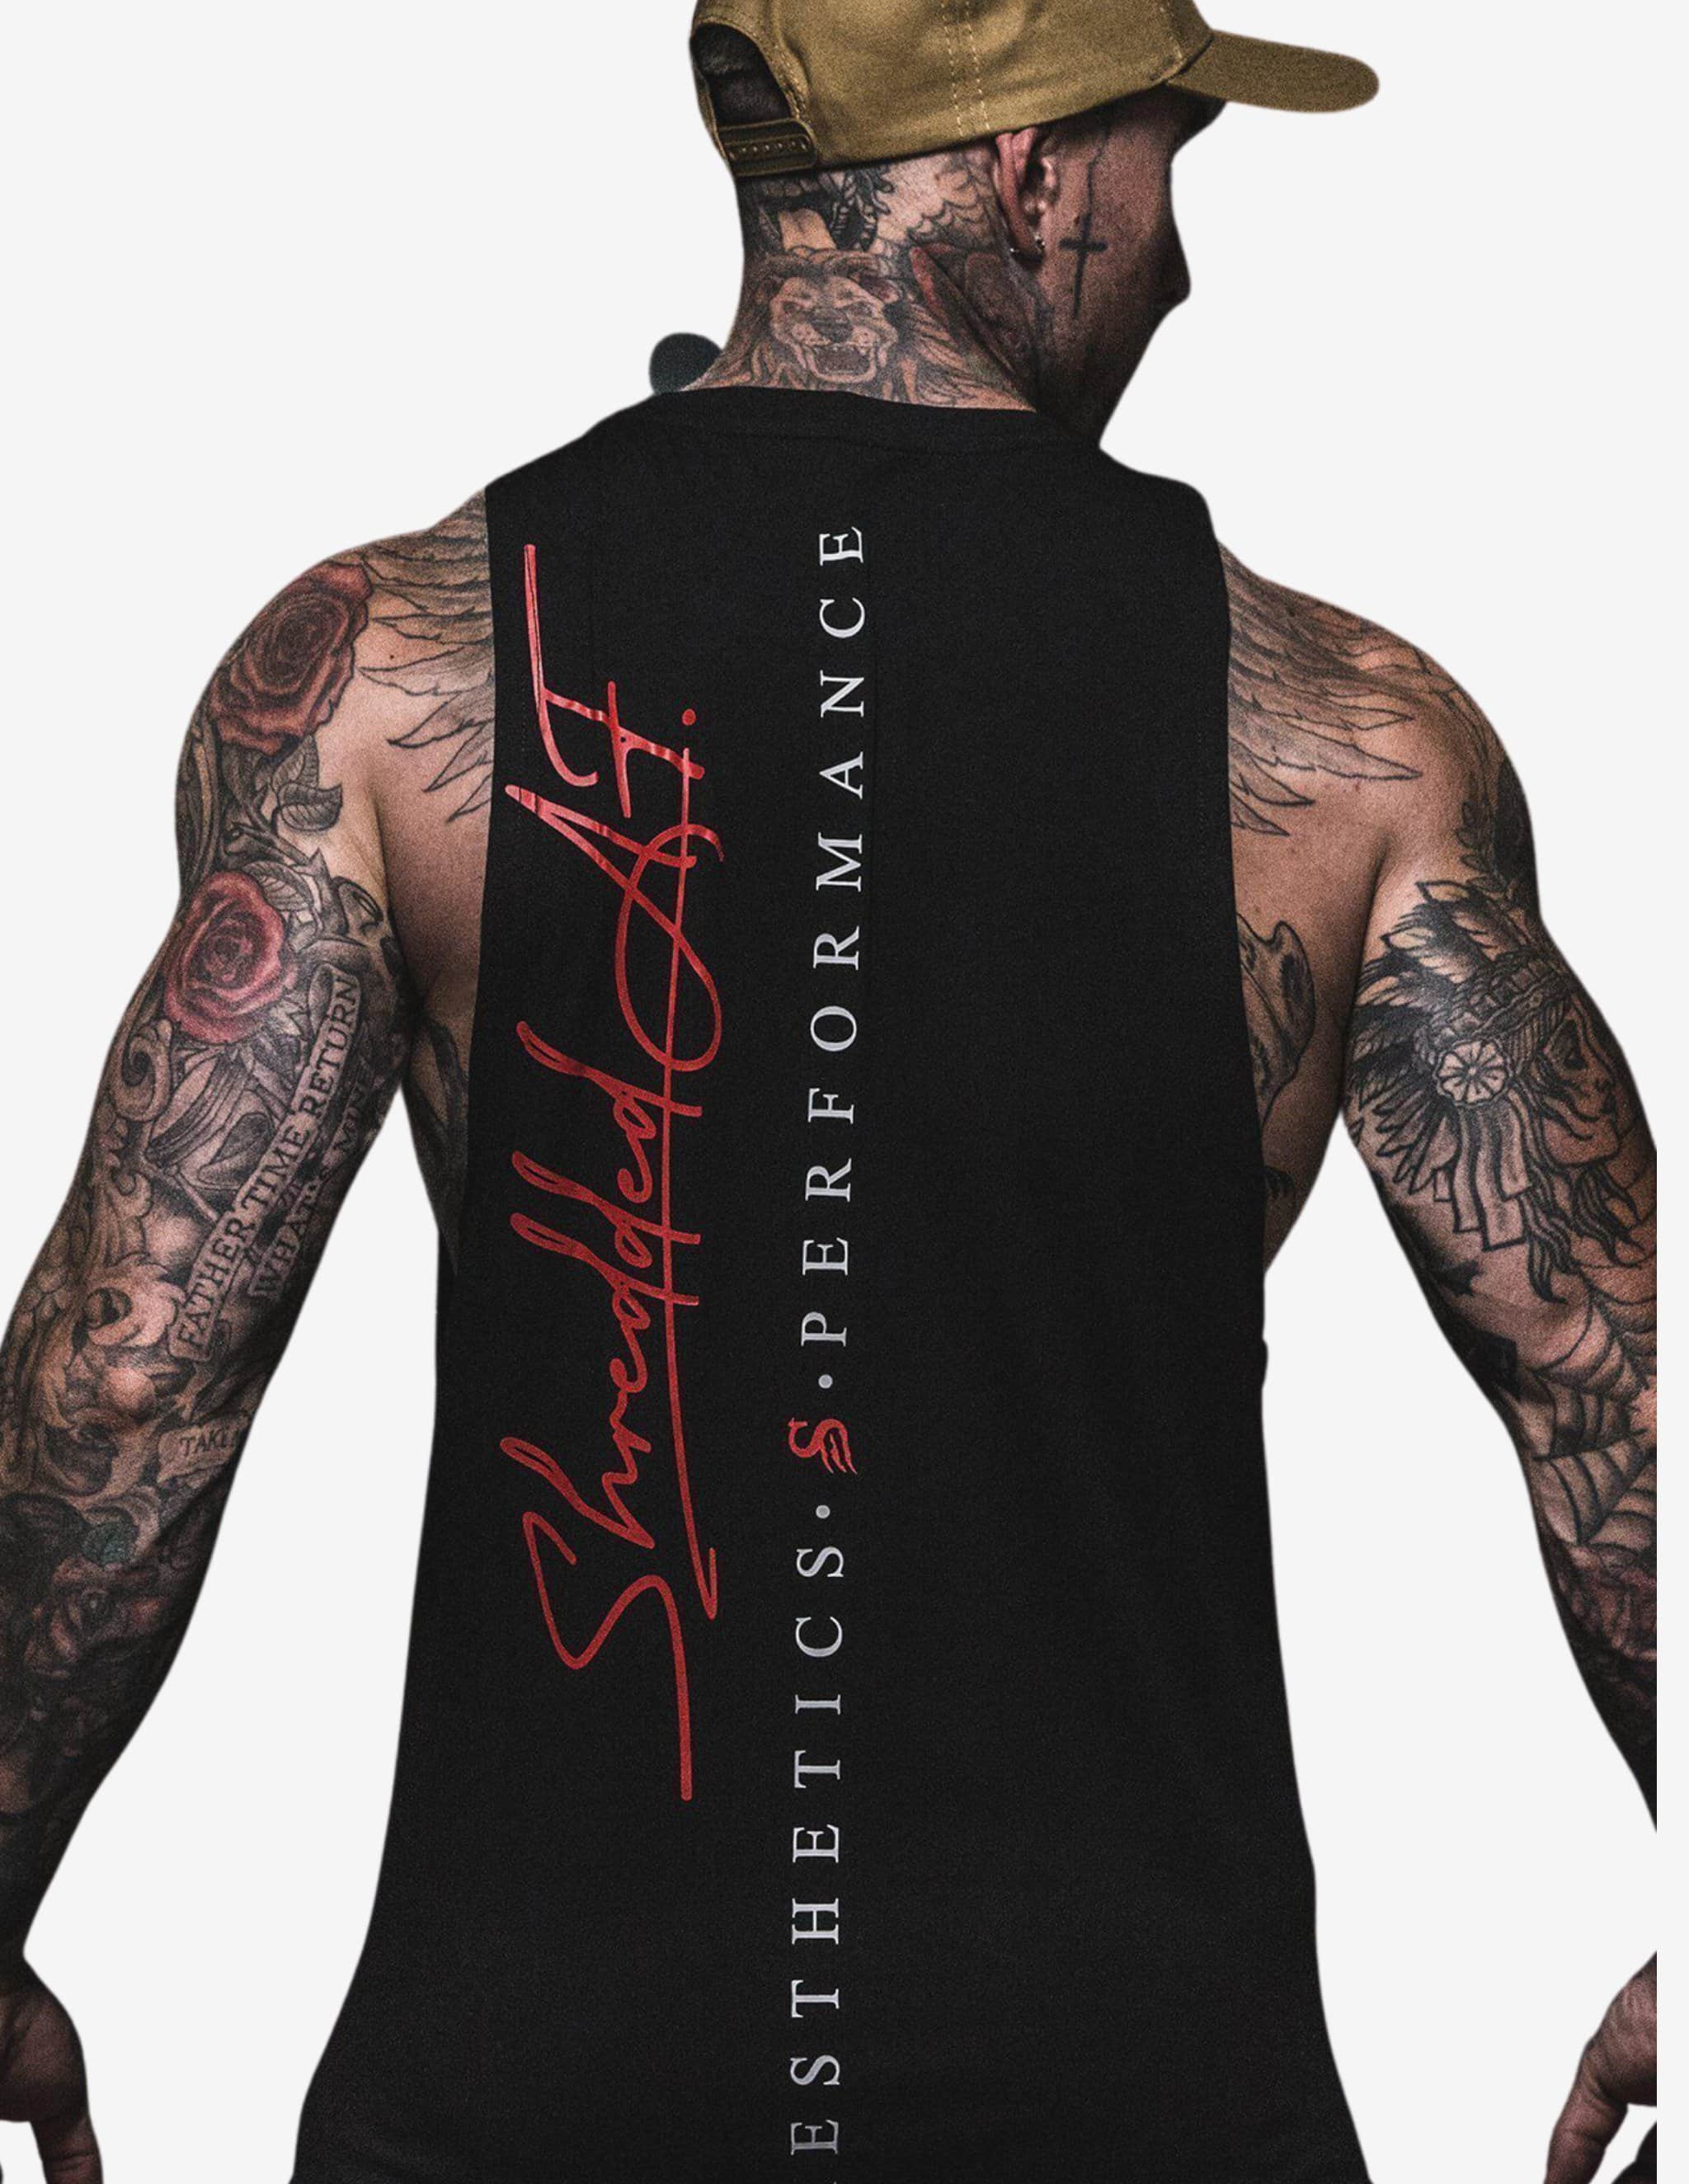 Signature - Longline Muscle Tank top - Black / Red-Tank Man-Stay Shredded-Guru Muscle